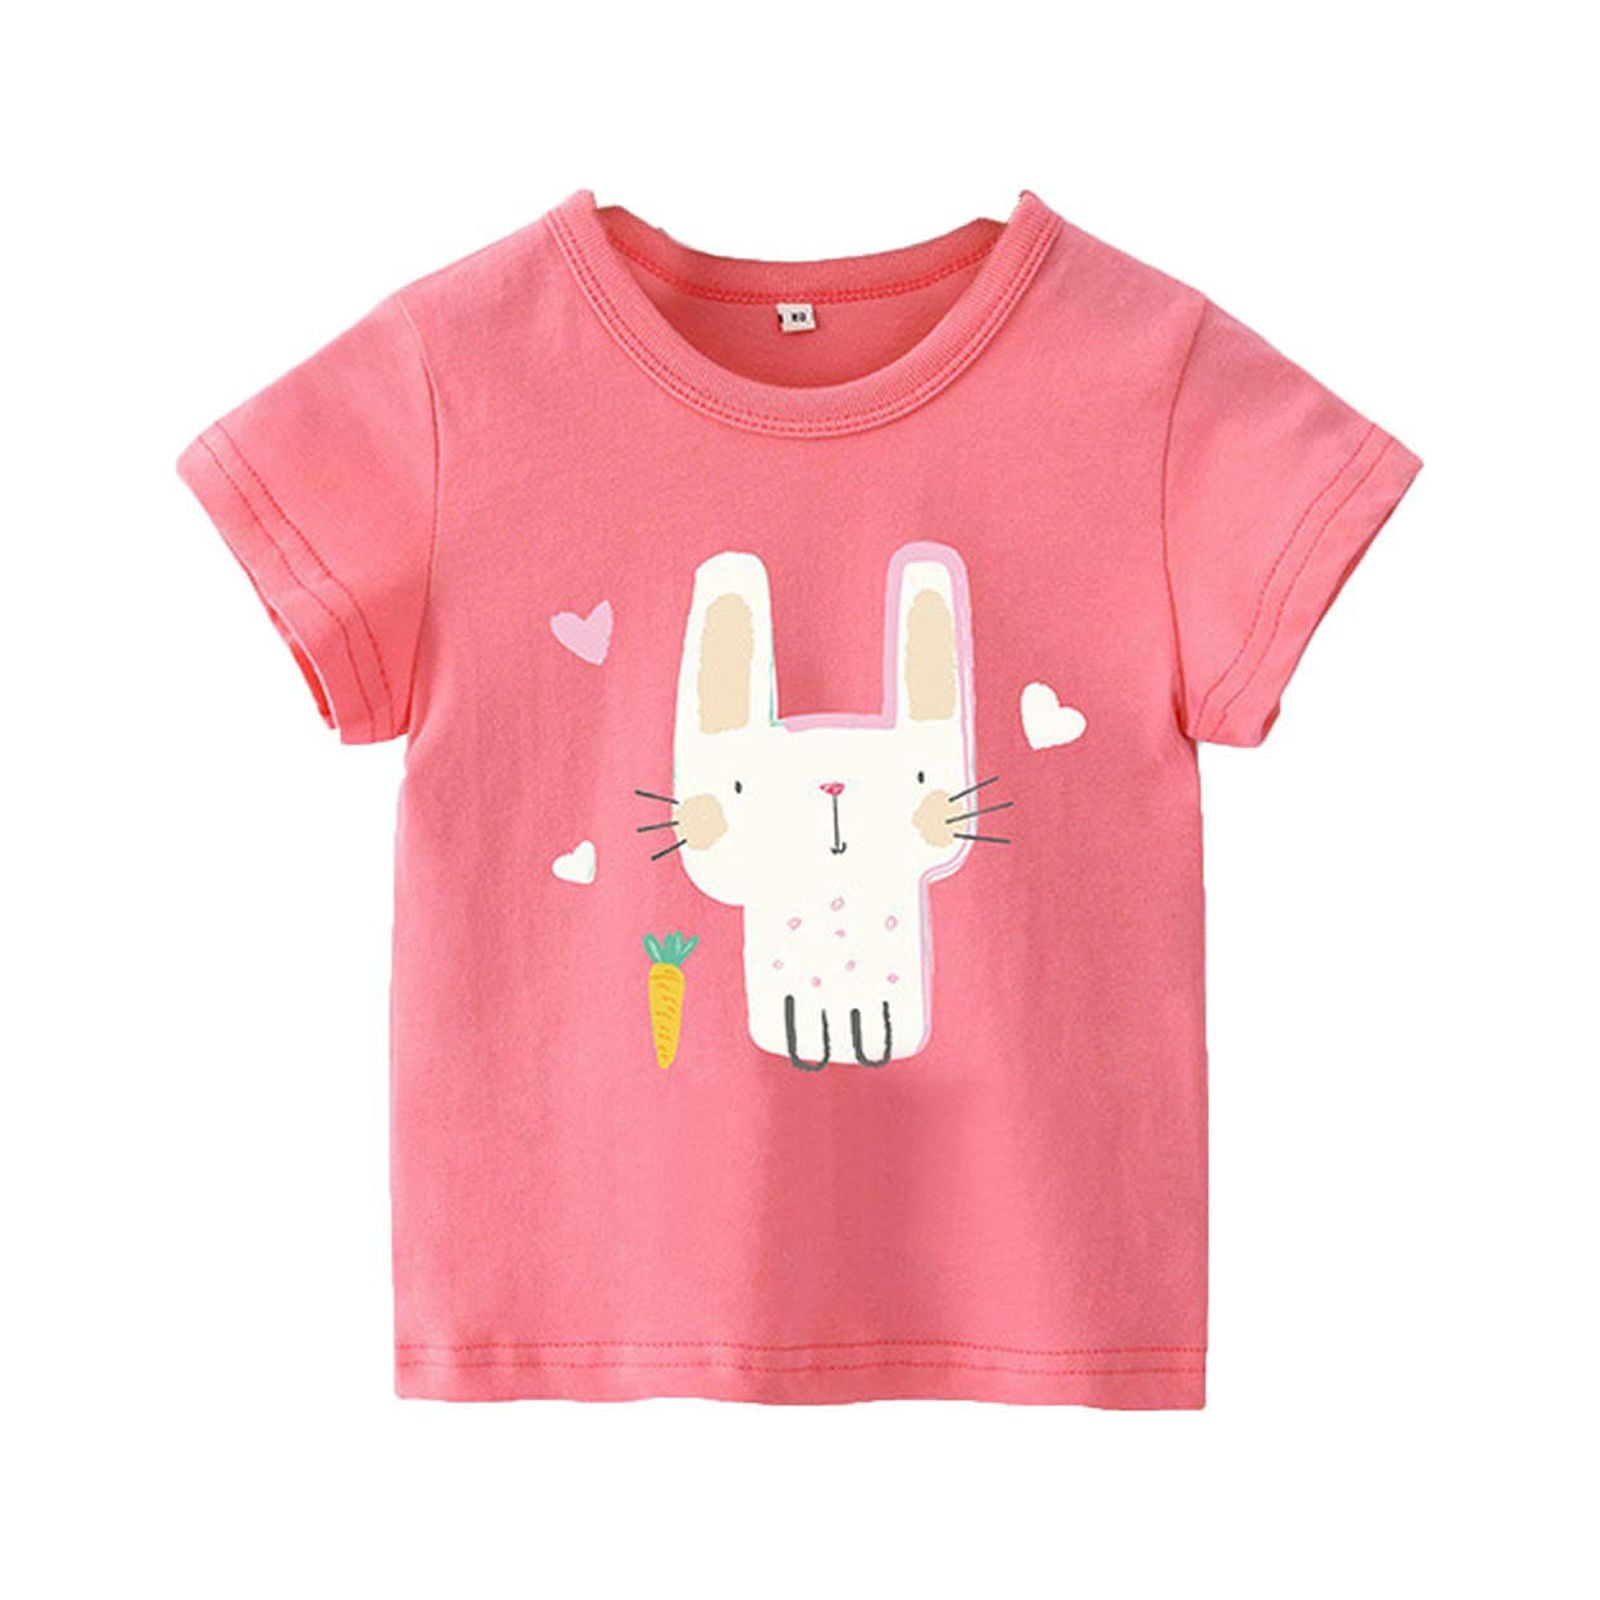 HESHENG Toddler Kids Baby Girls Easter Outfits Short Sleeve Rabbit